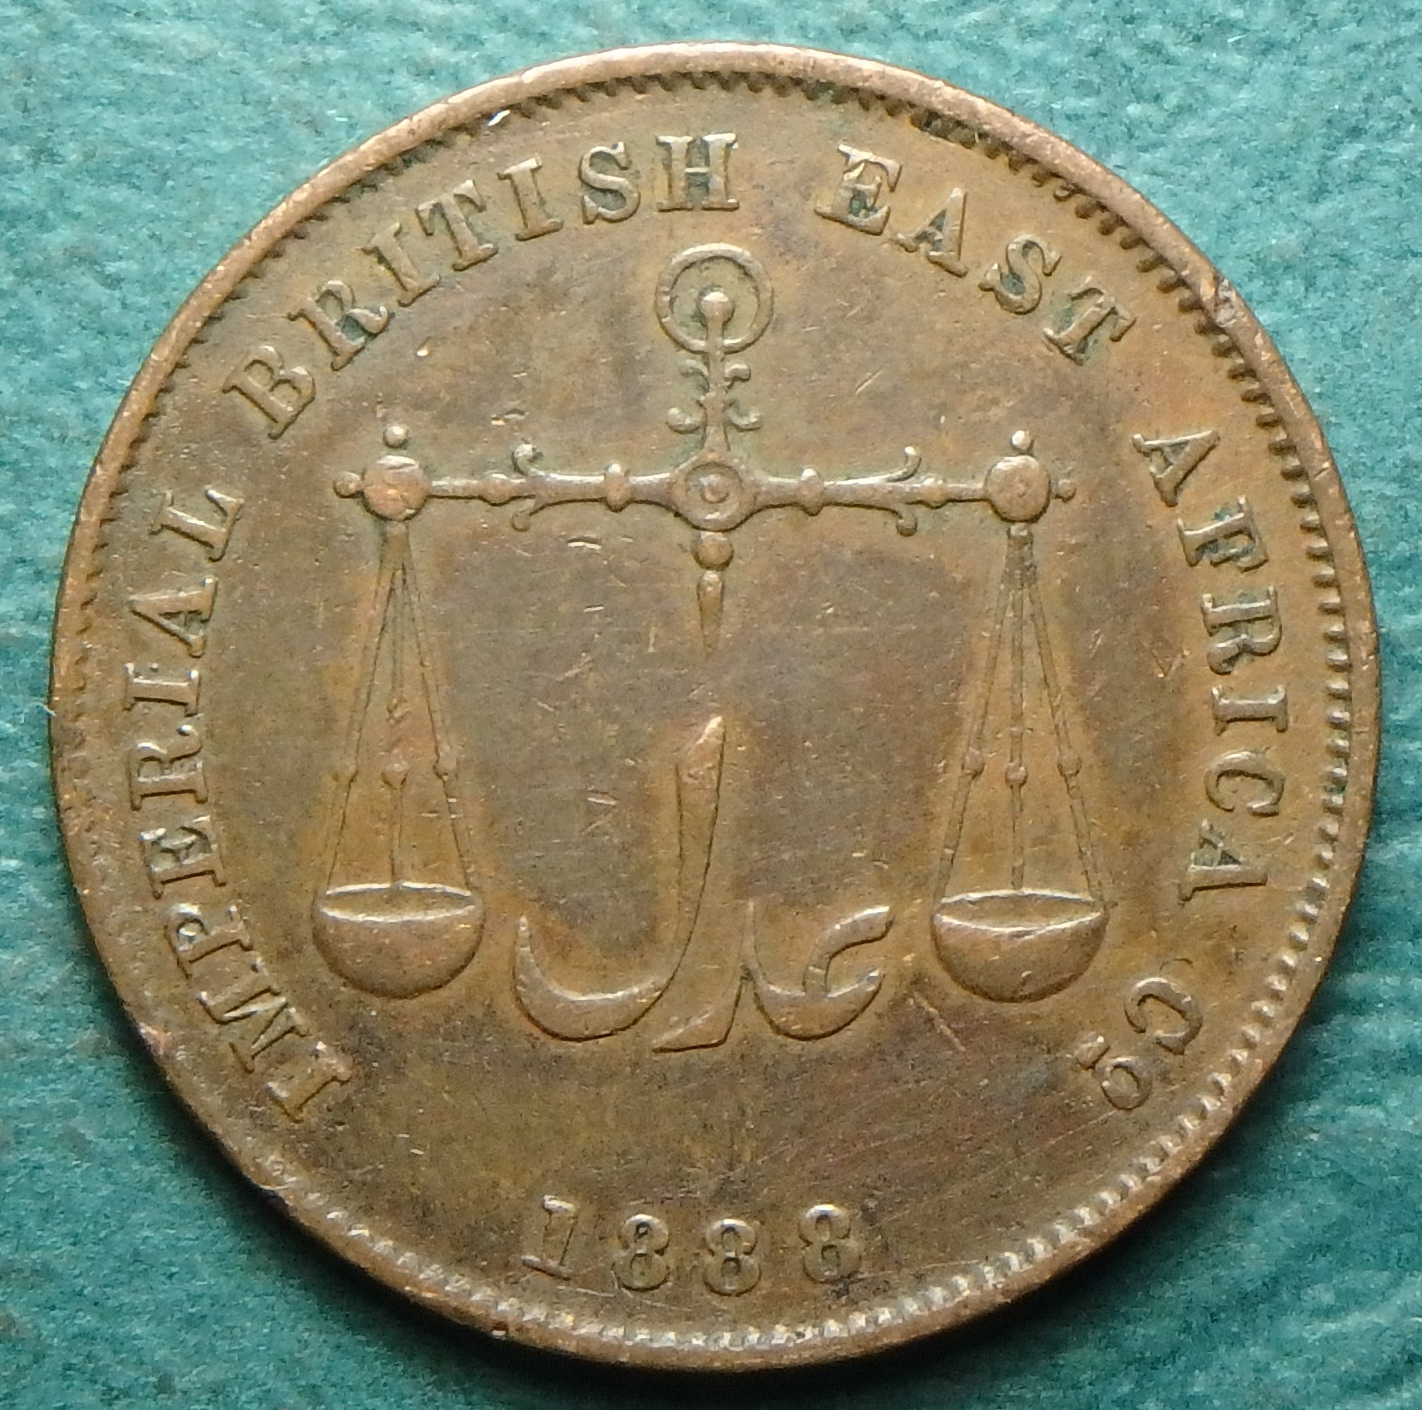 1888 GB-MB 1 p obv.JPG